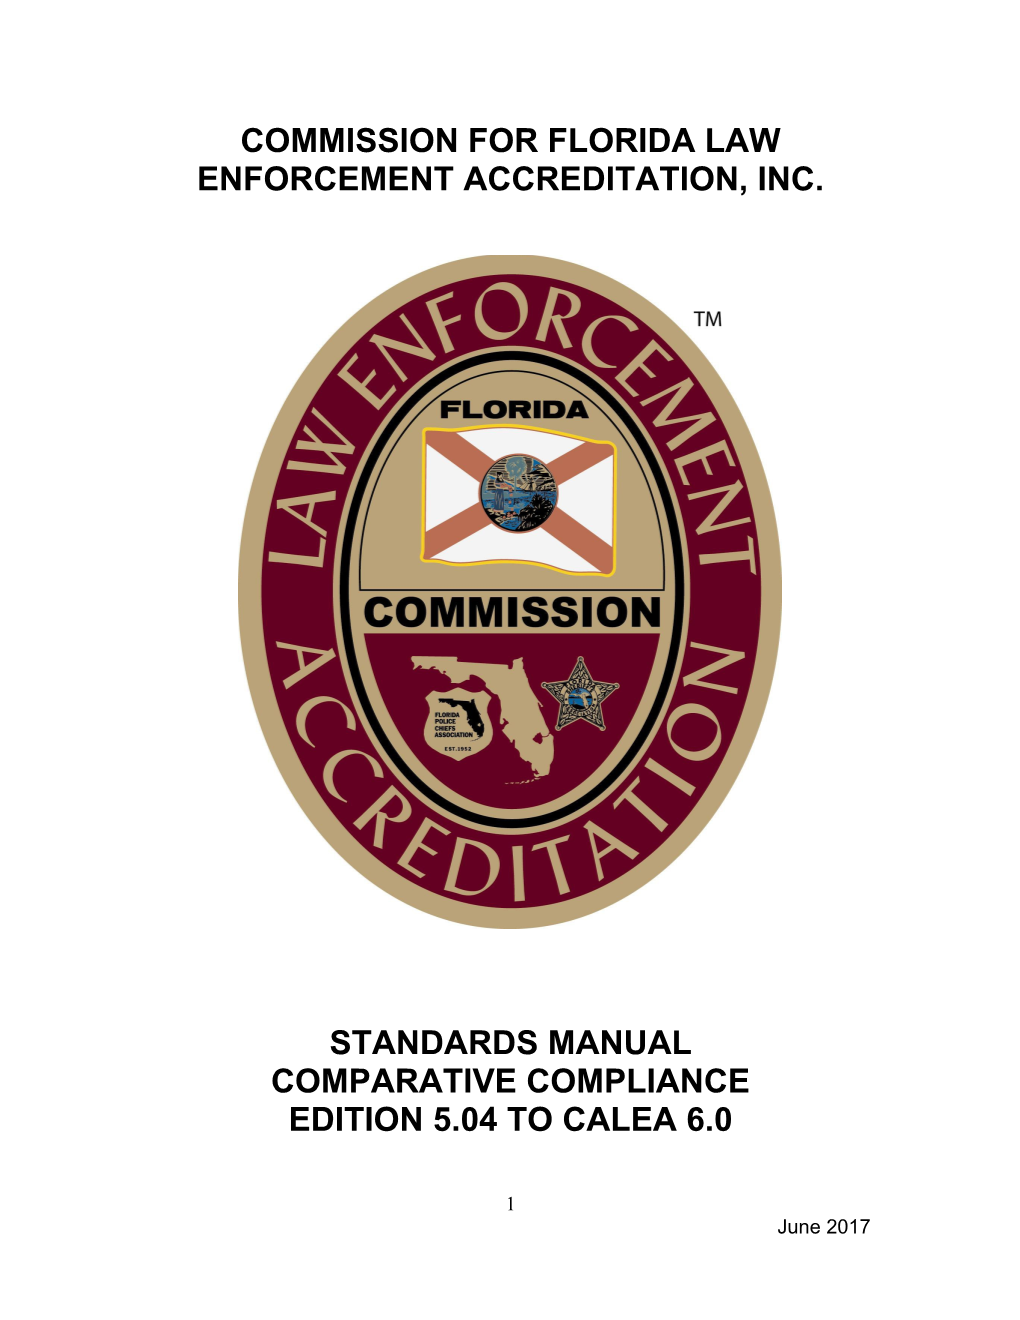 Commission for Florida Law Enforcement Accreditation, Inc